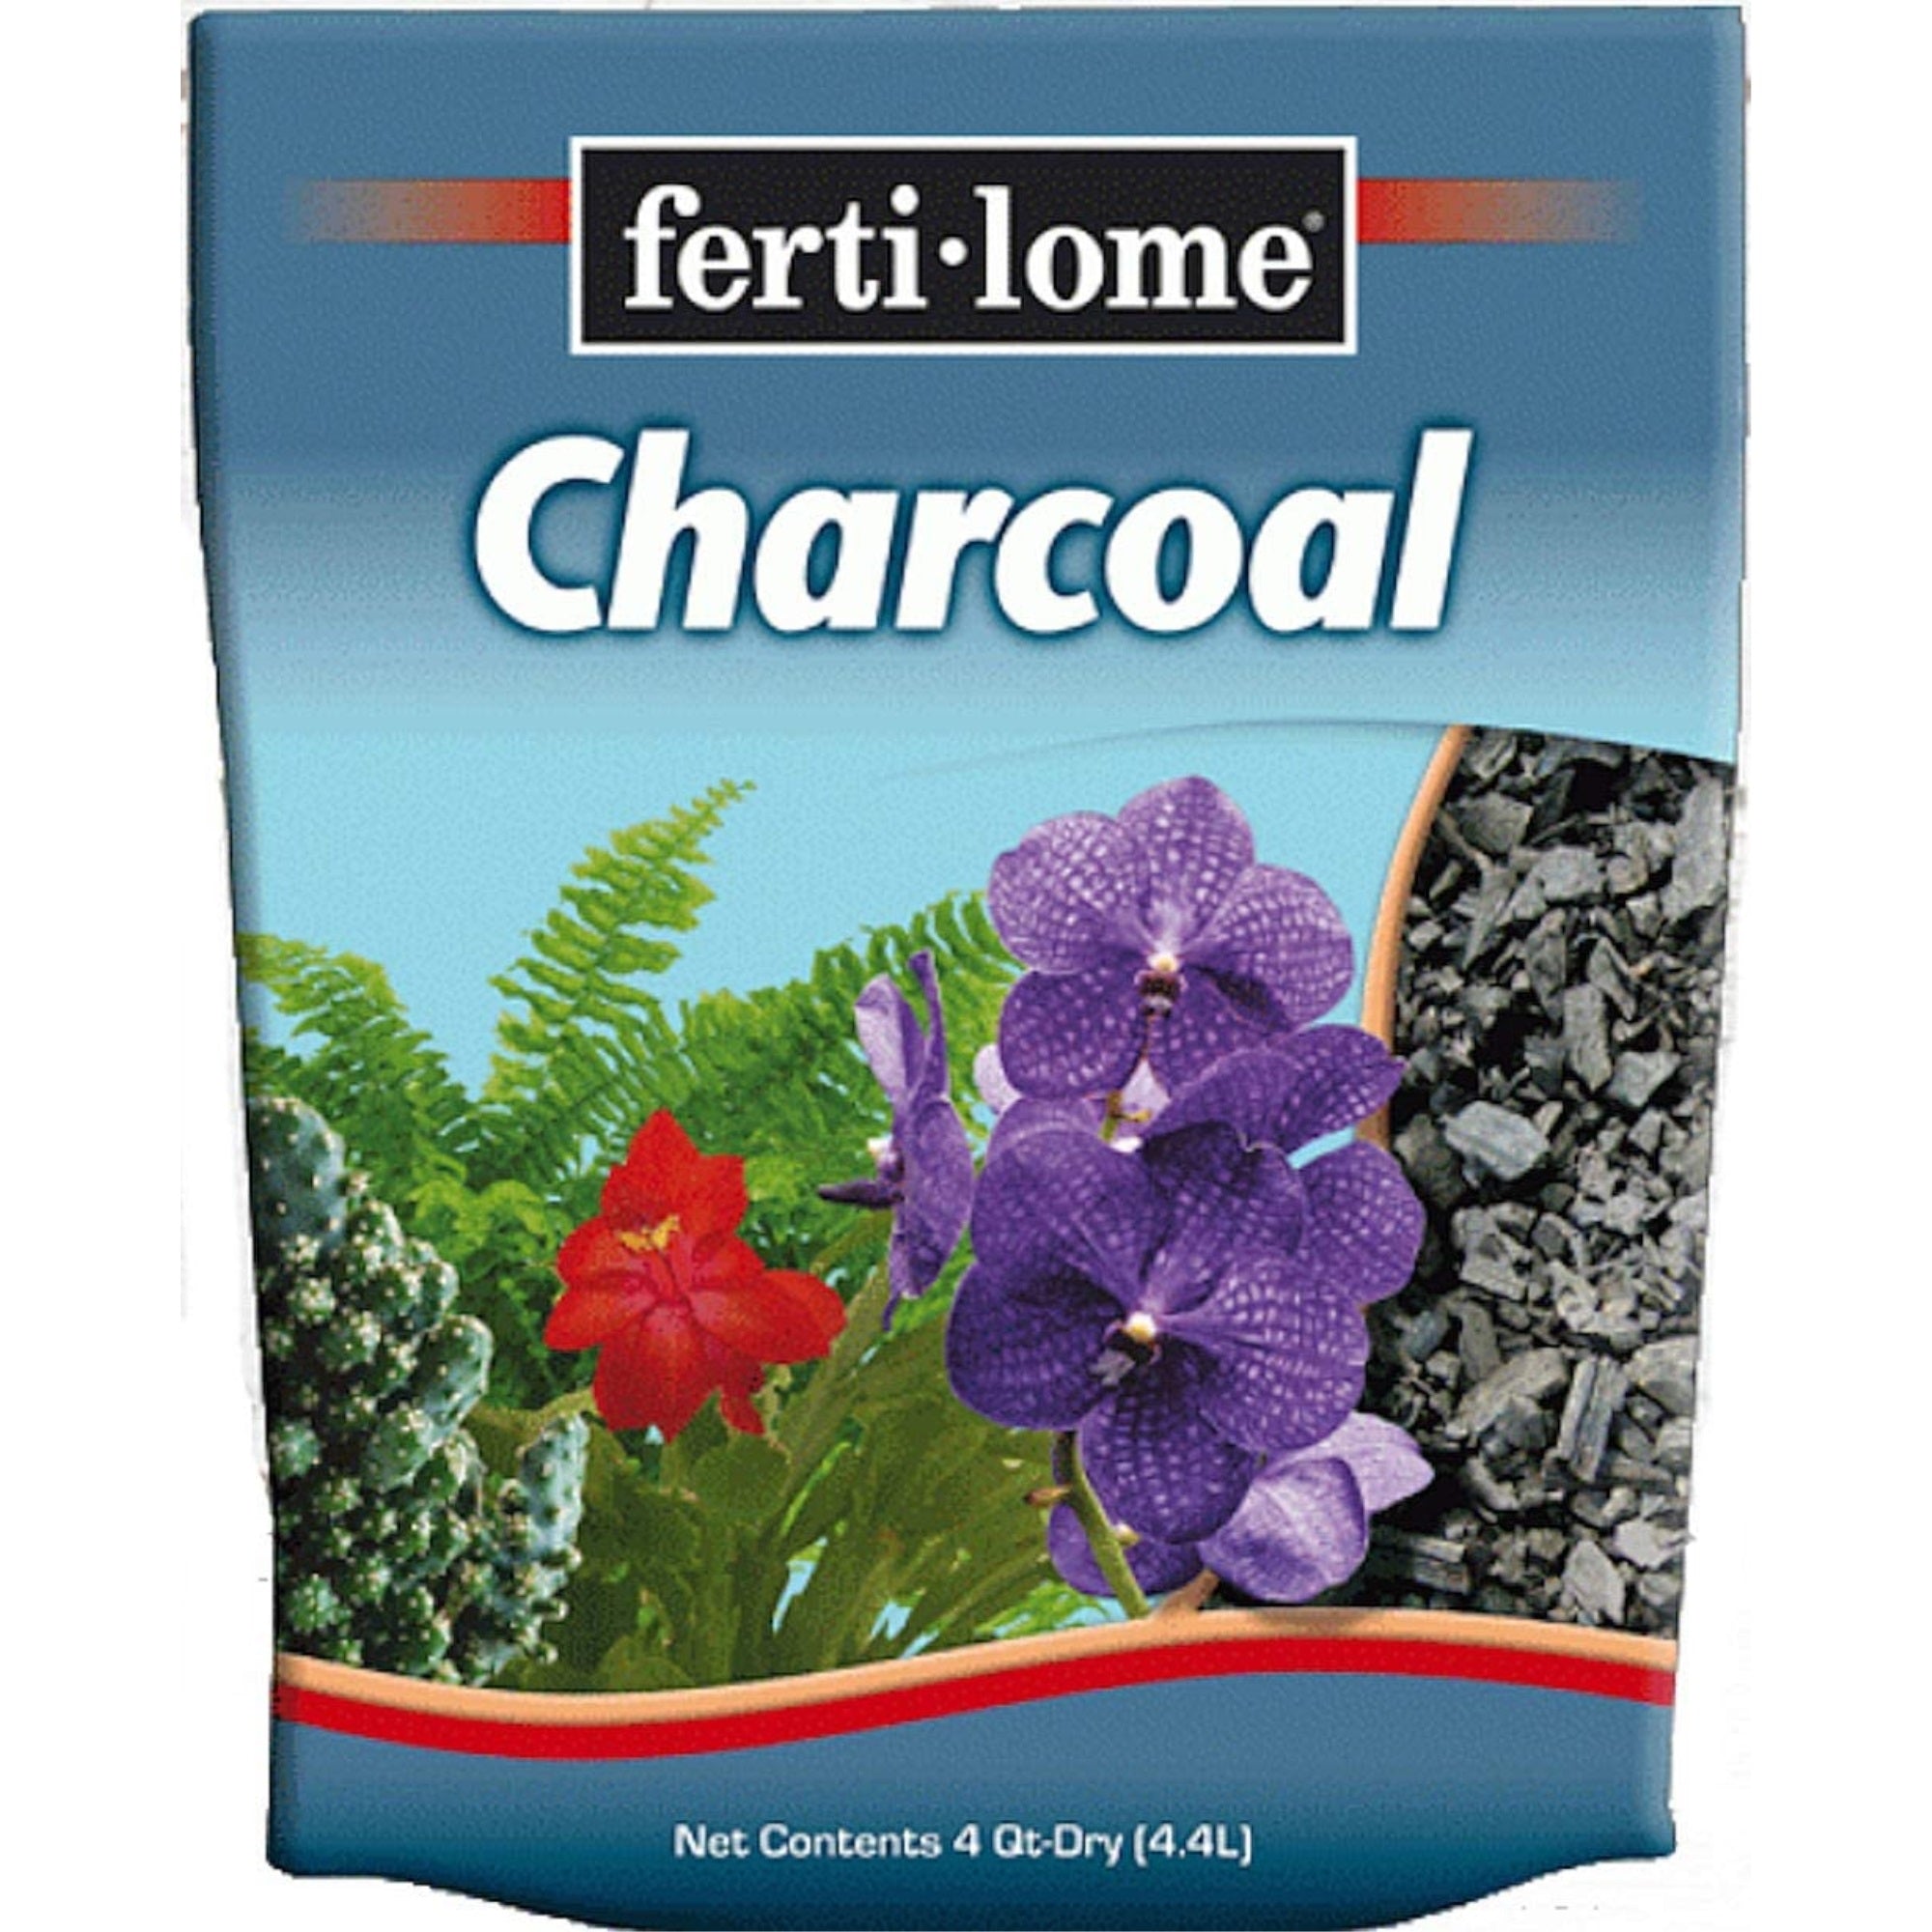 Fertilome Charcoal Soil Plant Hydration Amendment, 4 Quarts